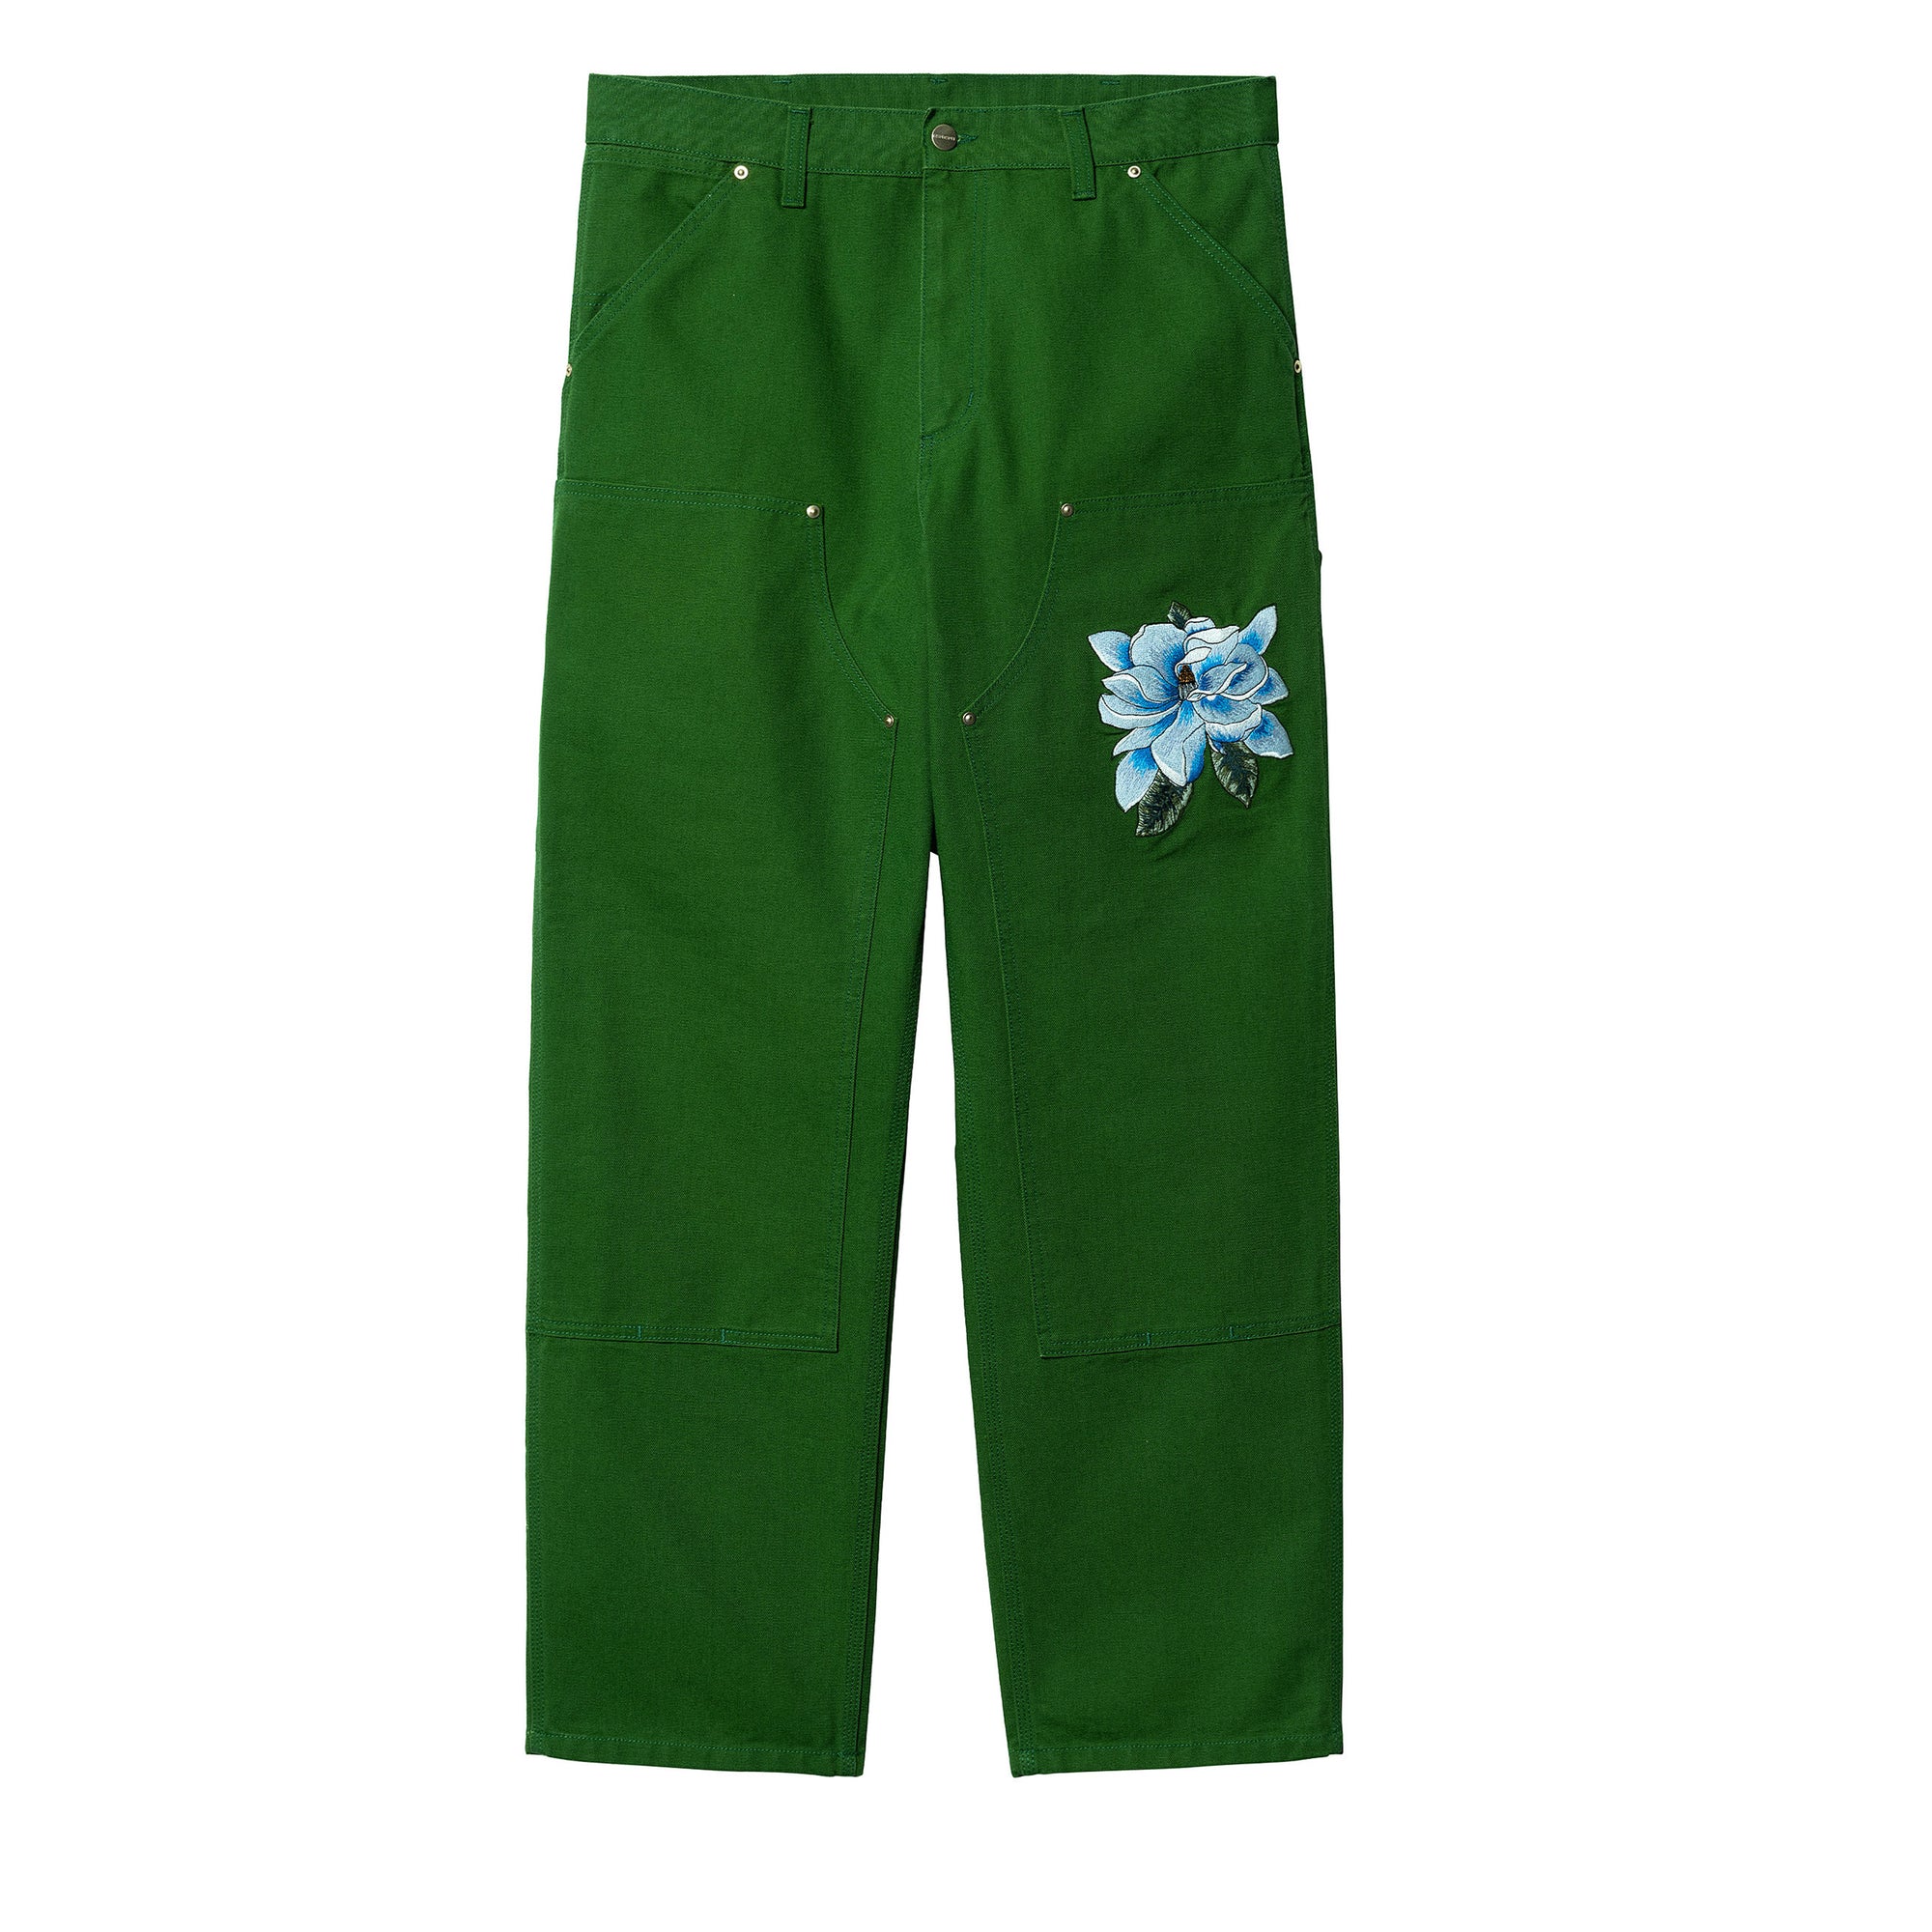 UPC 889192947825 - Carhartt Men's Knee Pad, Acidic Green, L